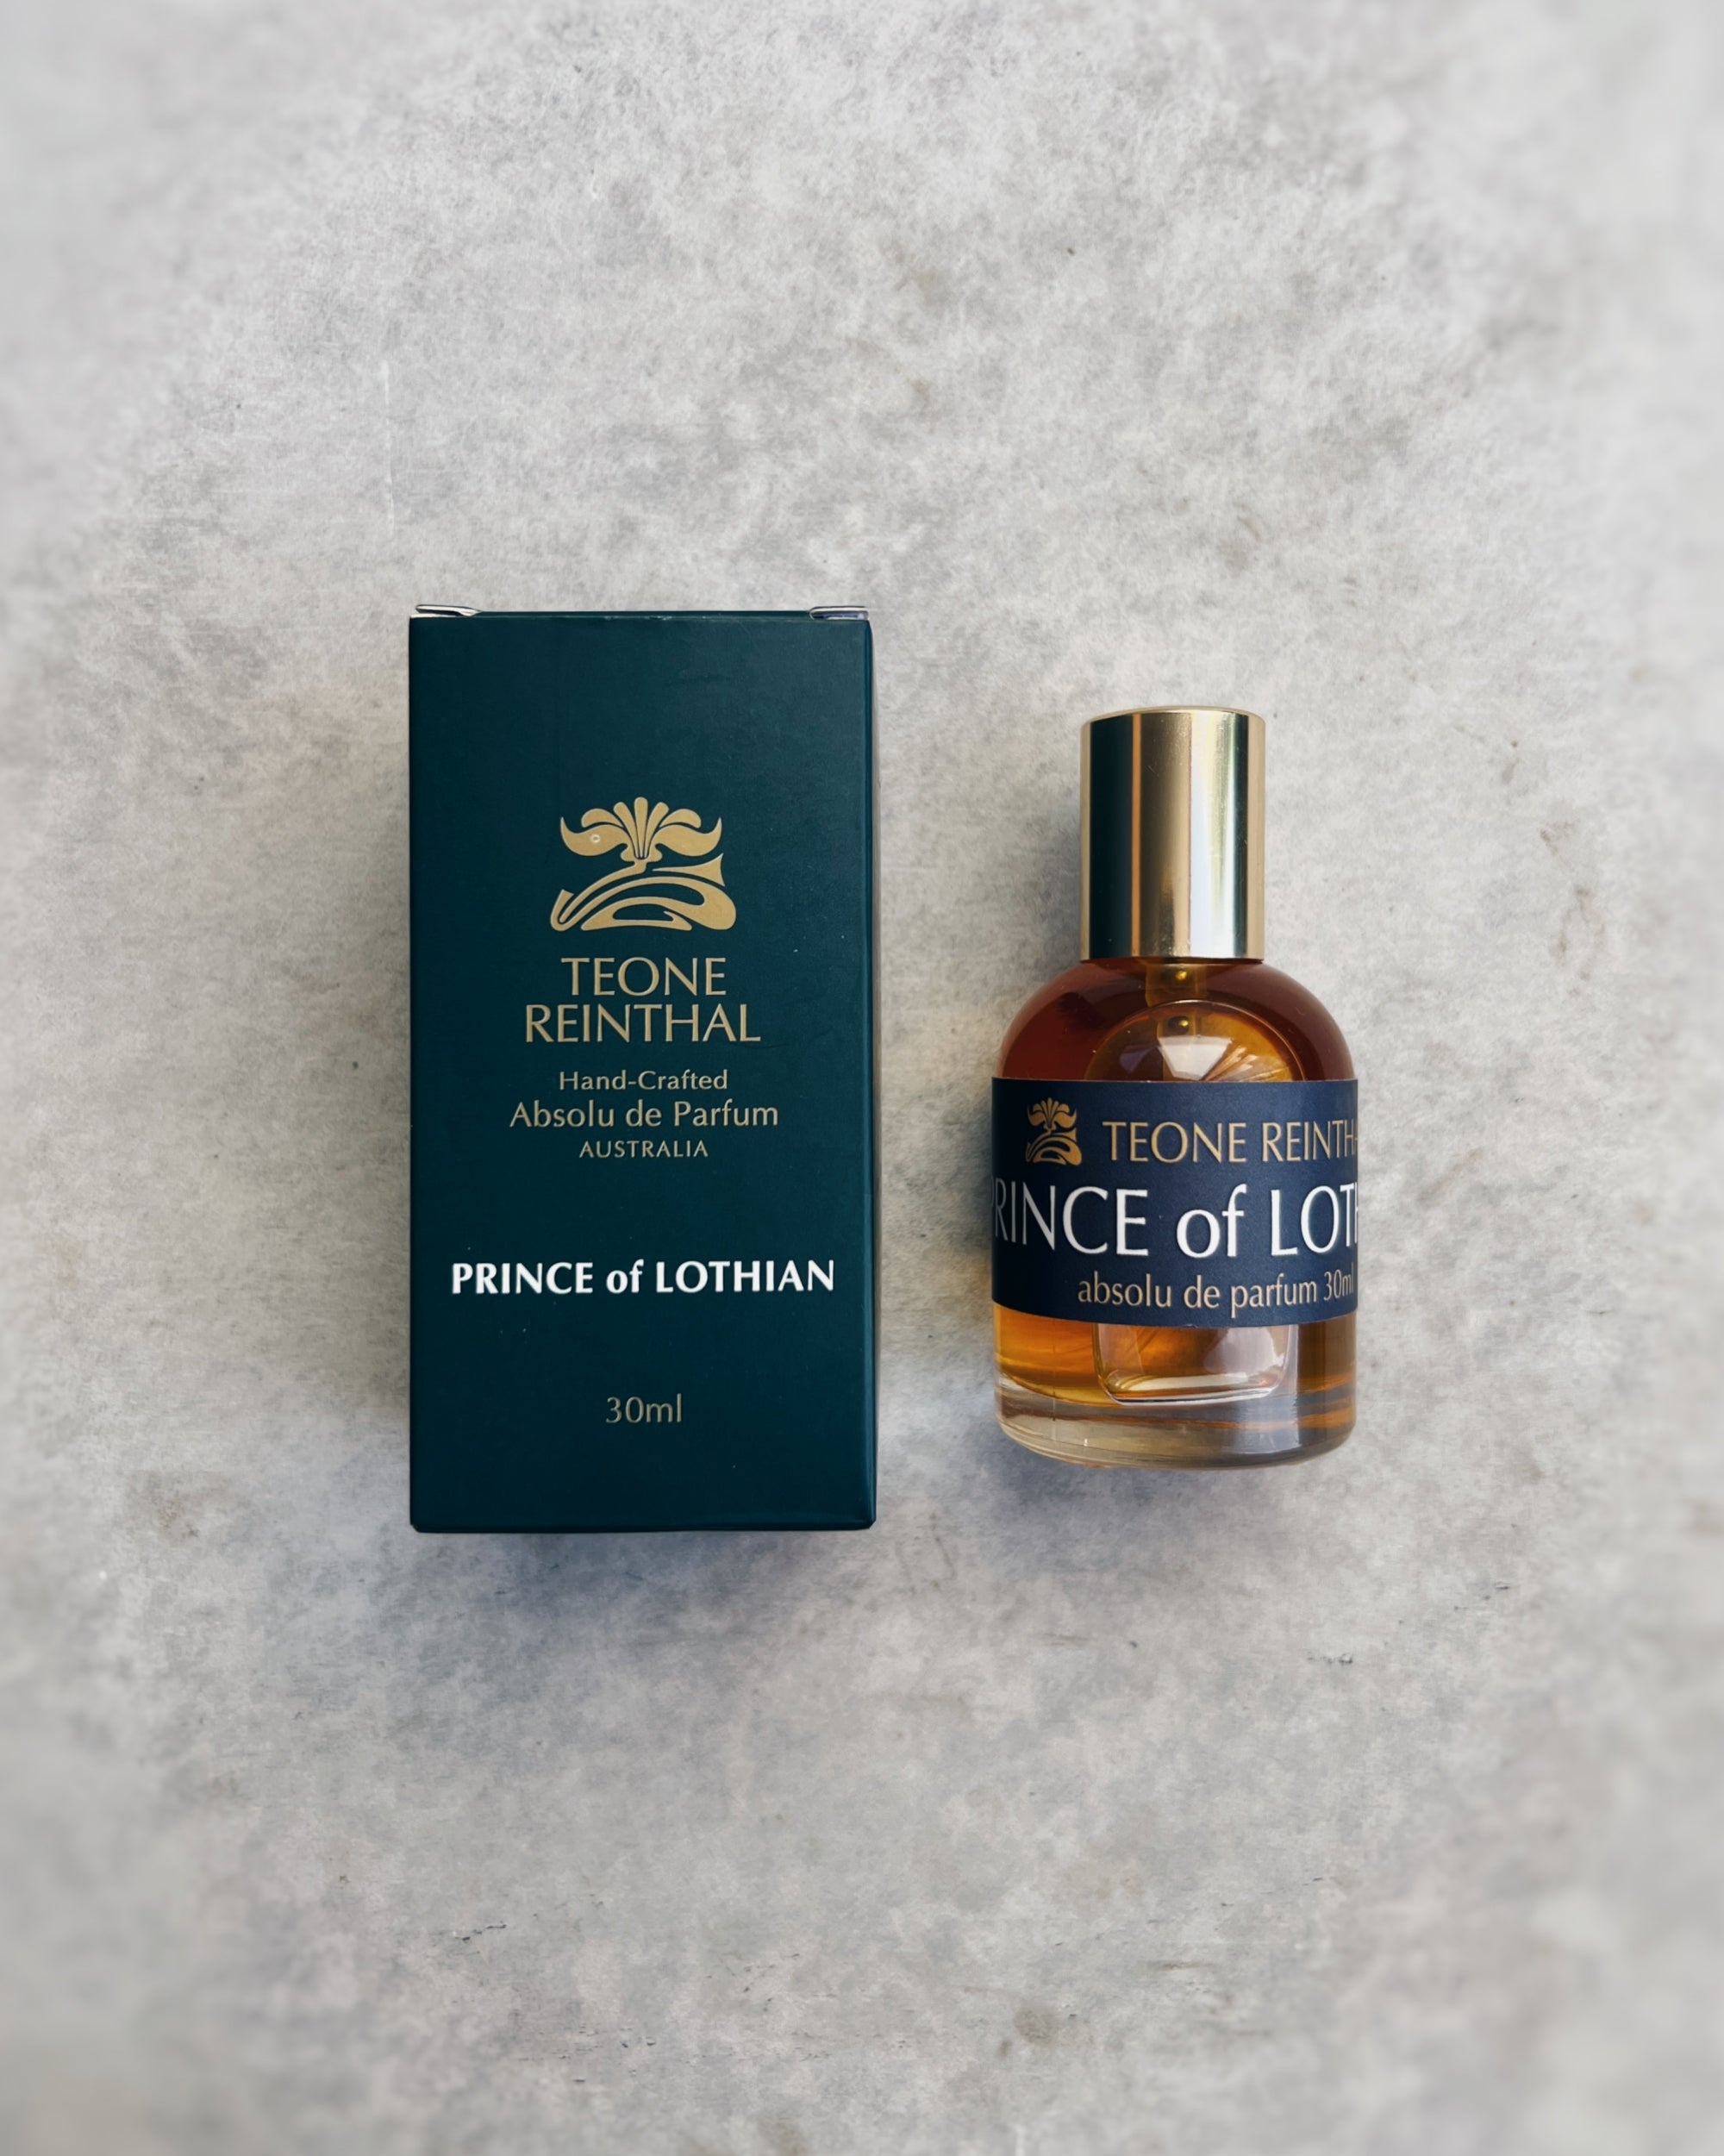 Teone Reinthal perfume : prince of lothian